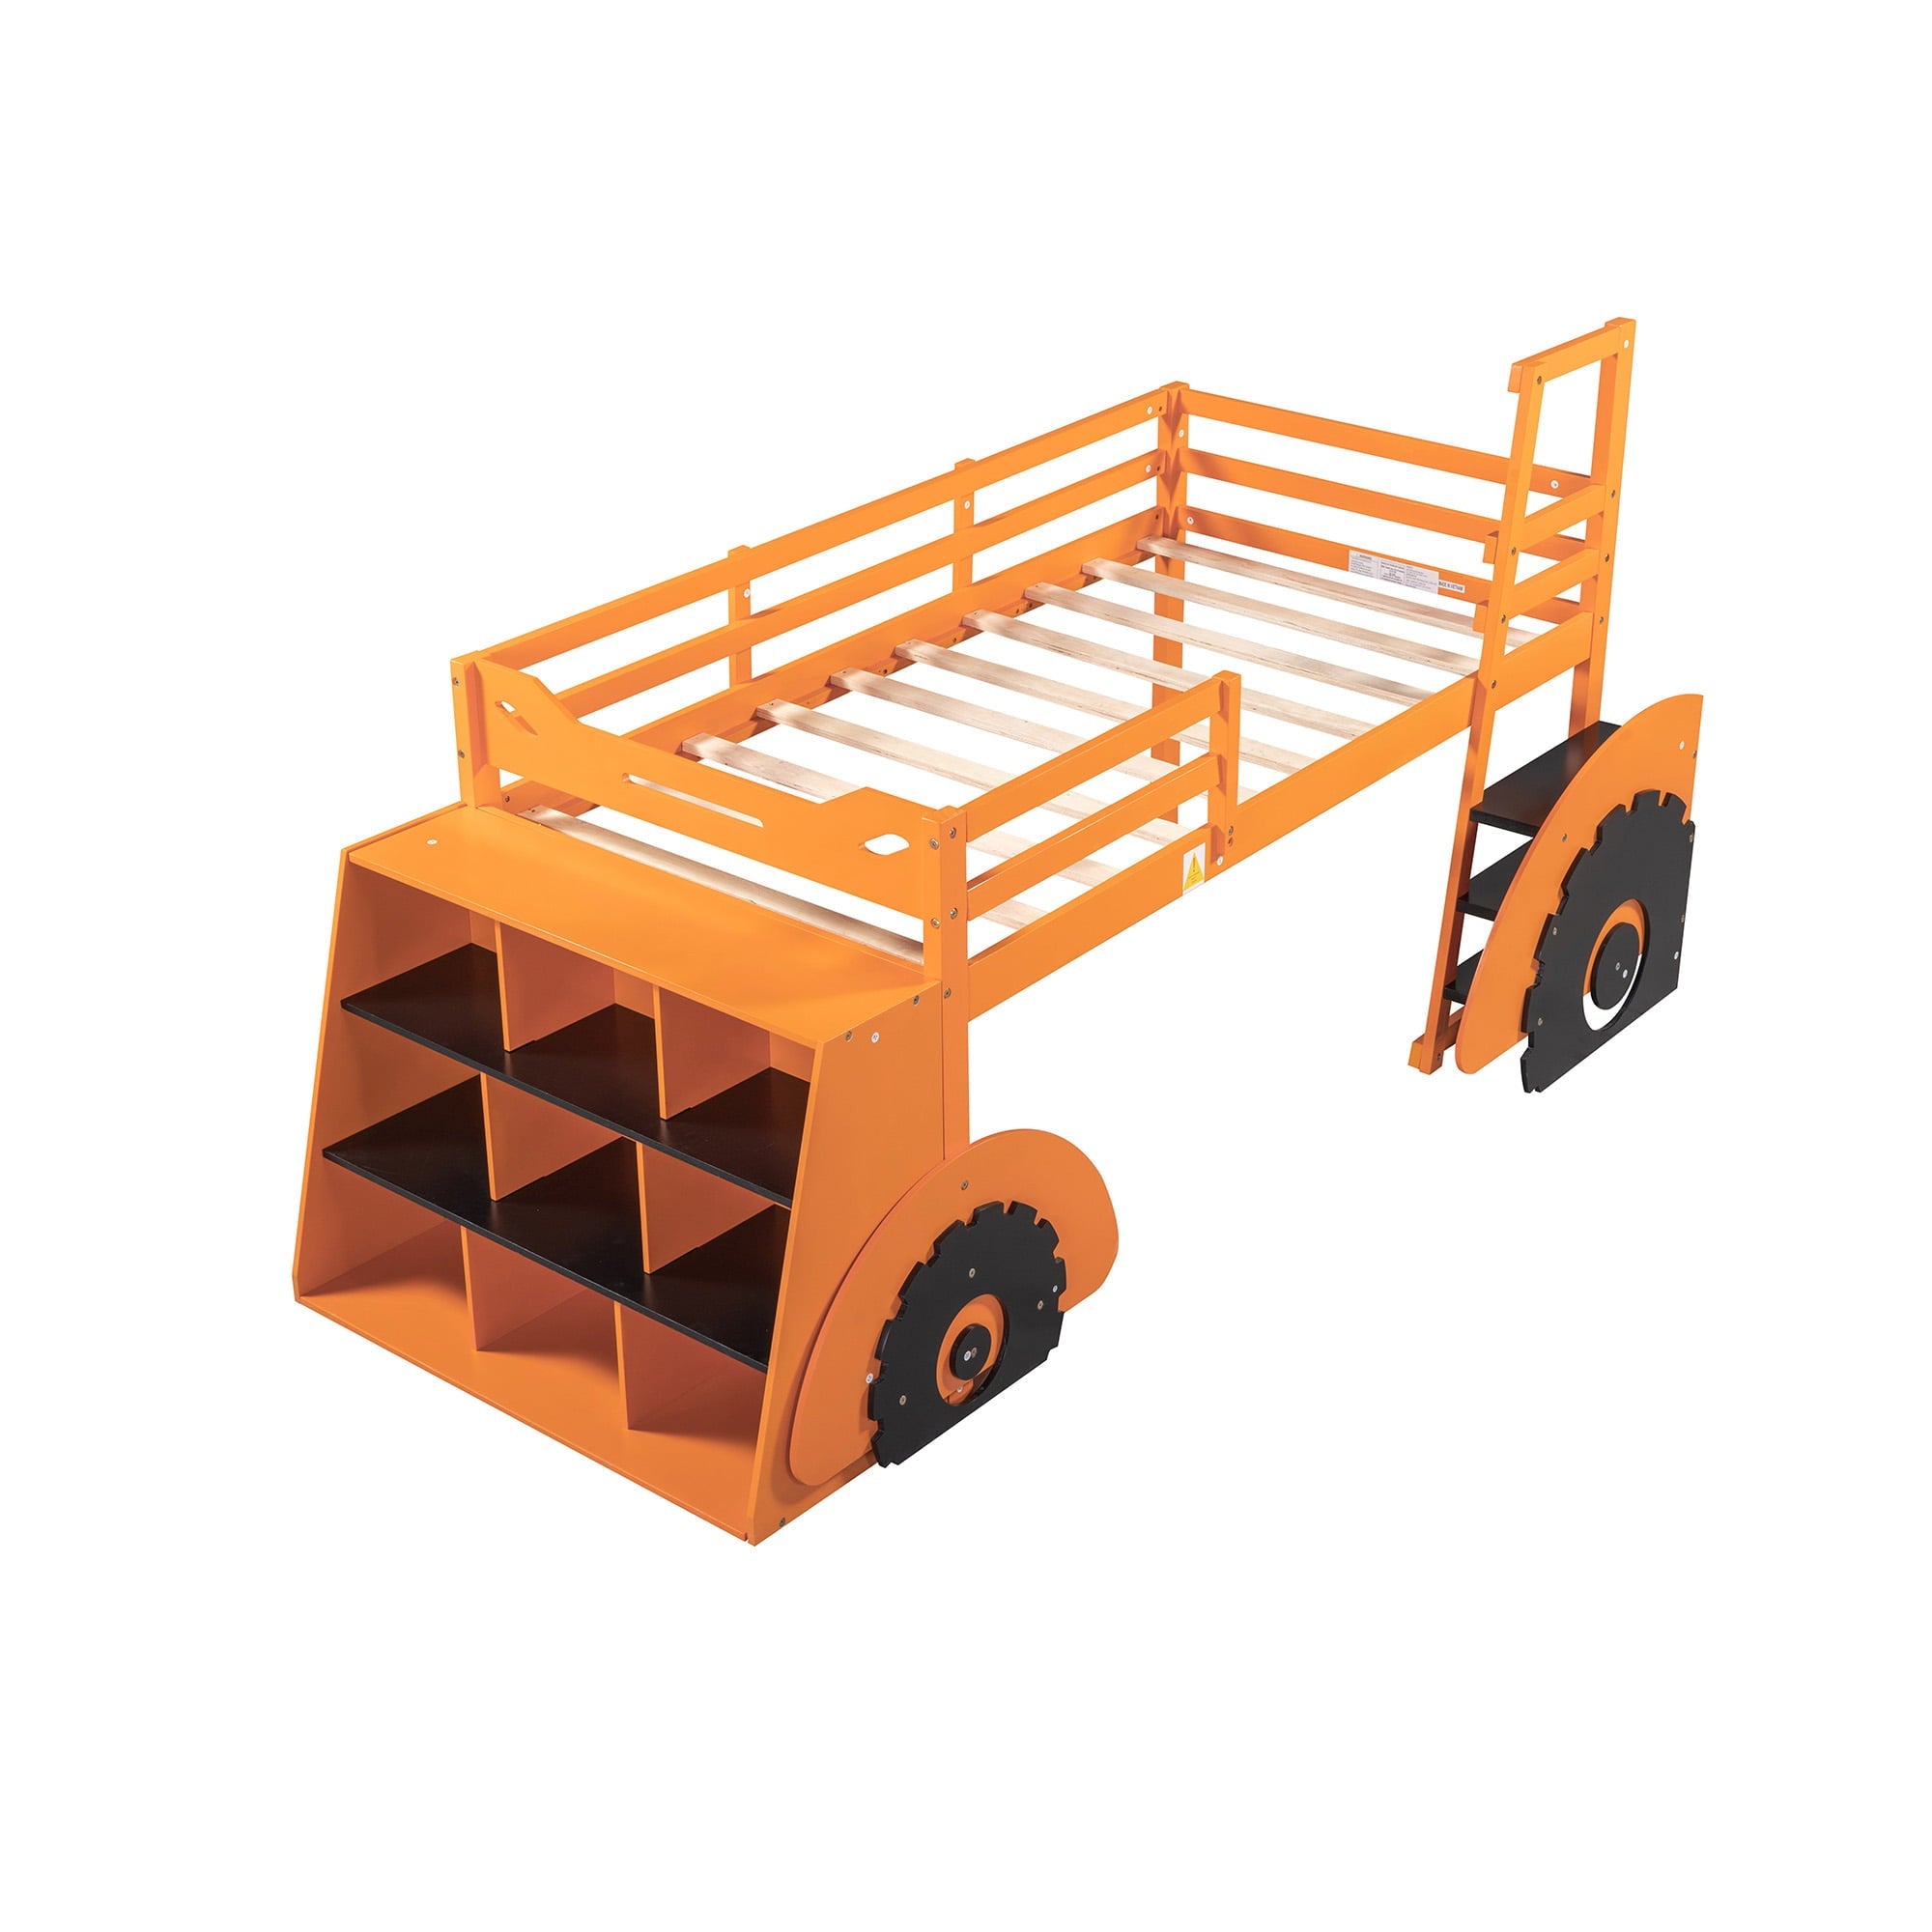 Pine Wood Car-Shaped Low Loft Bed with Shelf for Kids Bedroom, Orange